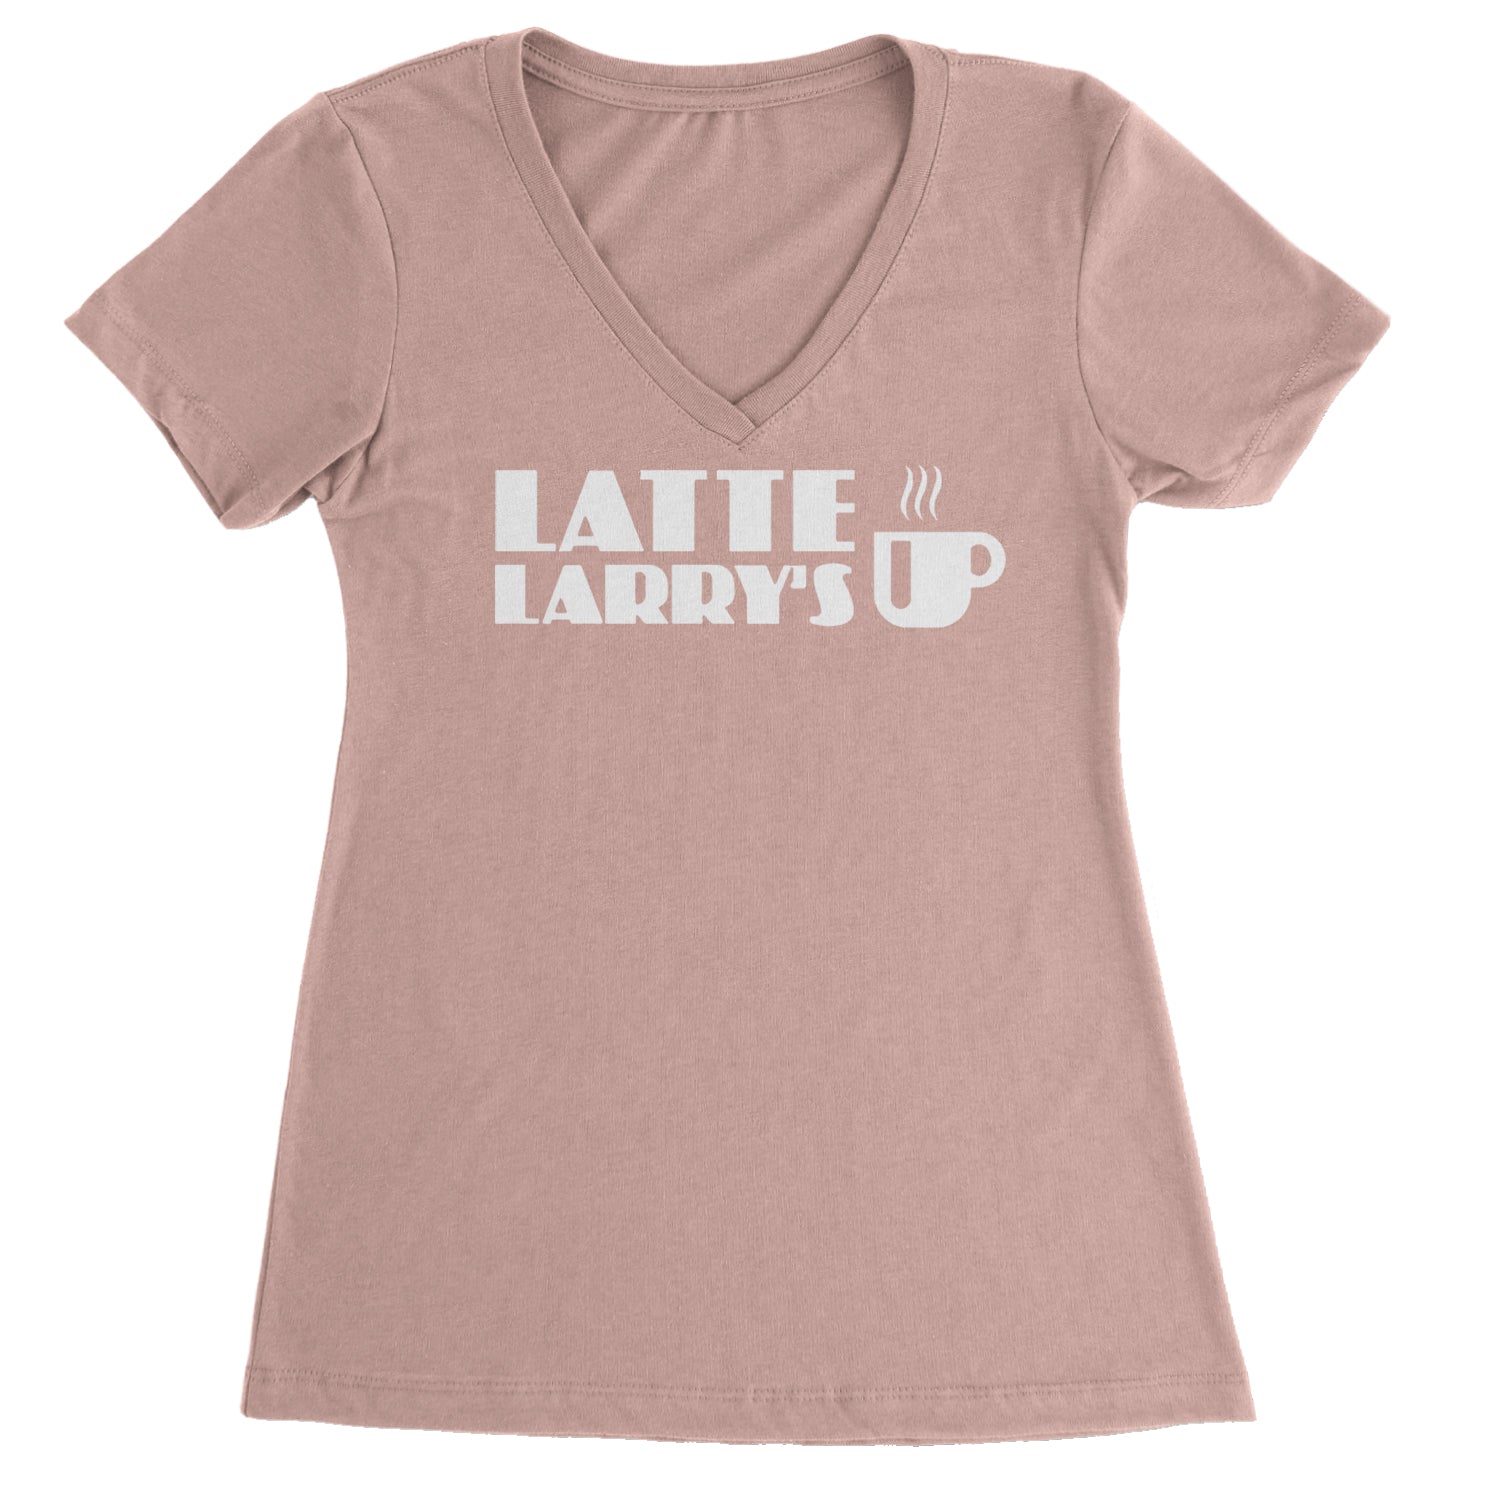 Latte Larry's Enthusiastic Coffee Ladies V-Neck T-shirt Light Pink